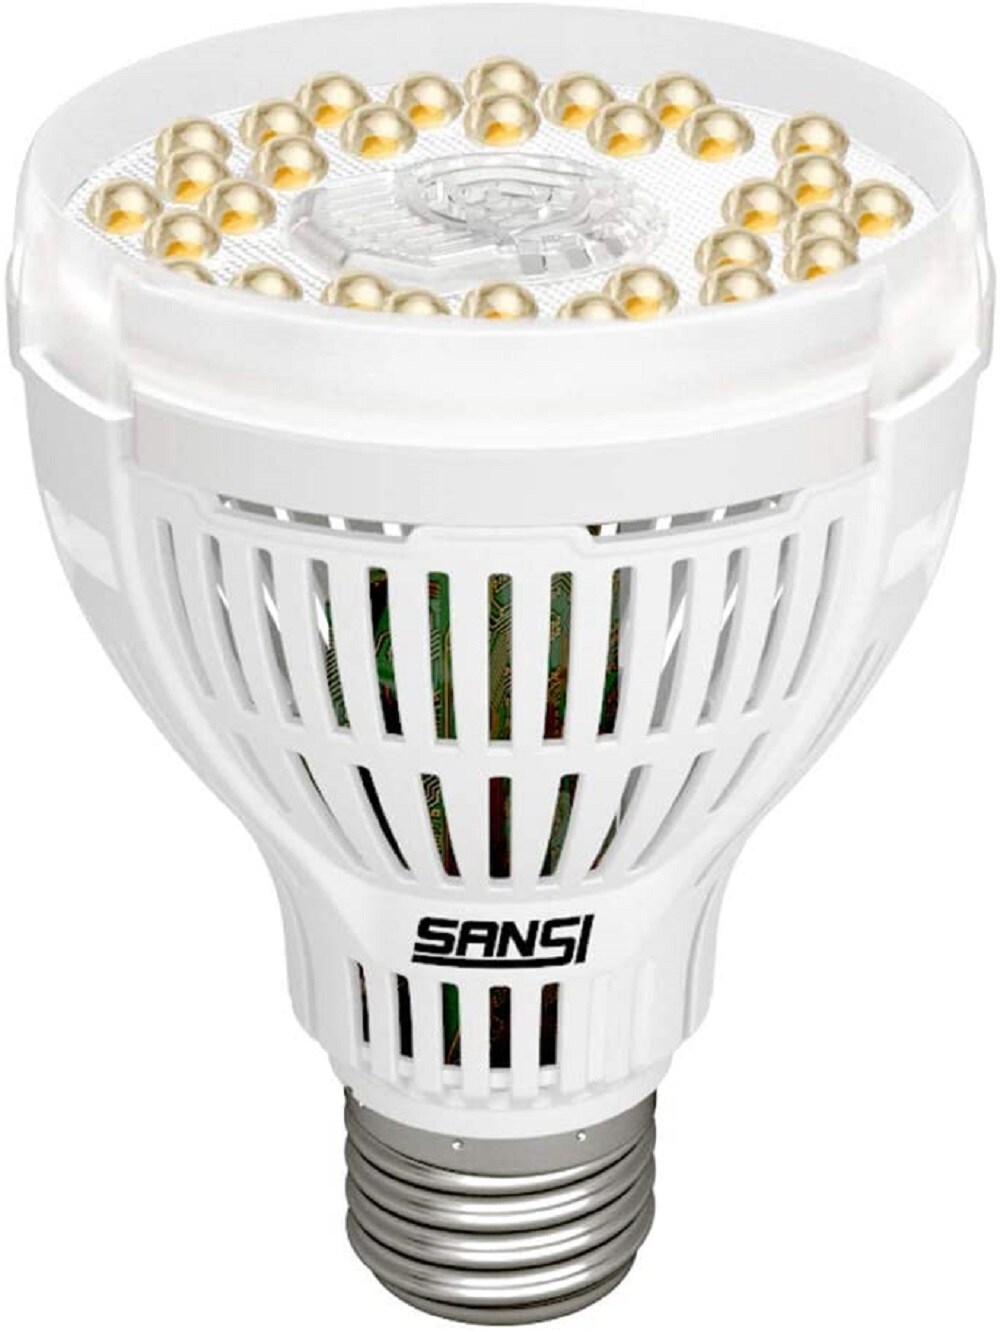 E27 LED Grow Light Bulb Sunlike Full Spectrum Hydroponic Plant Lamp 120W-250W 